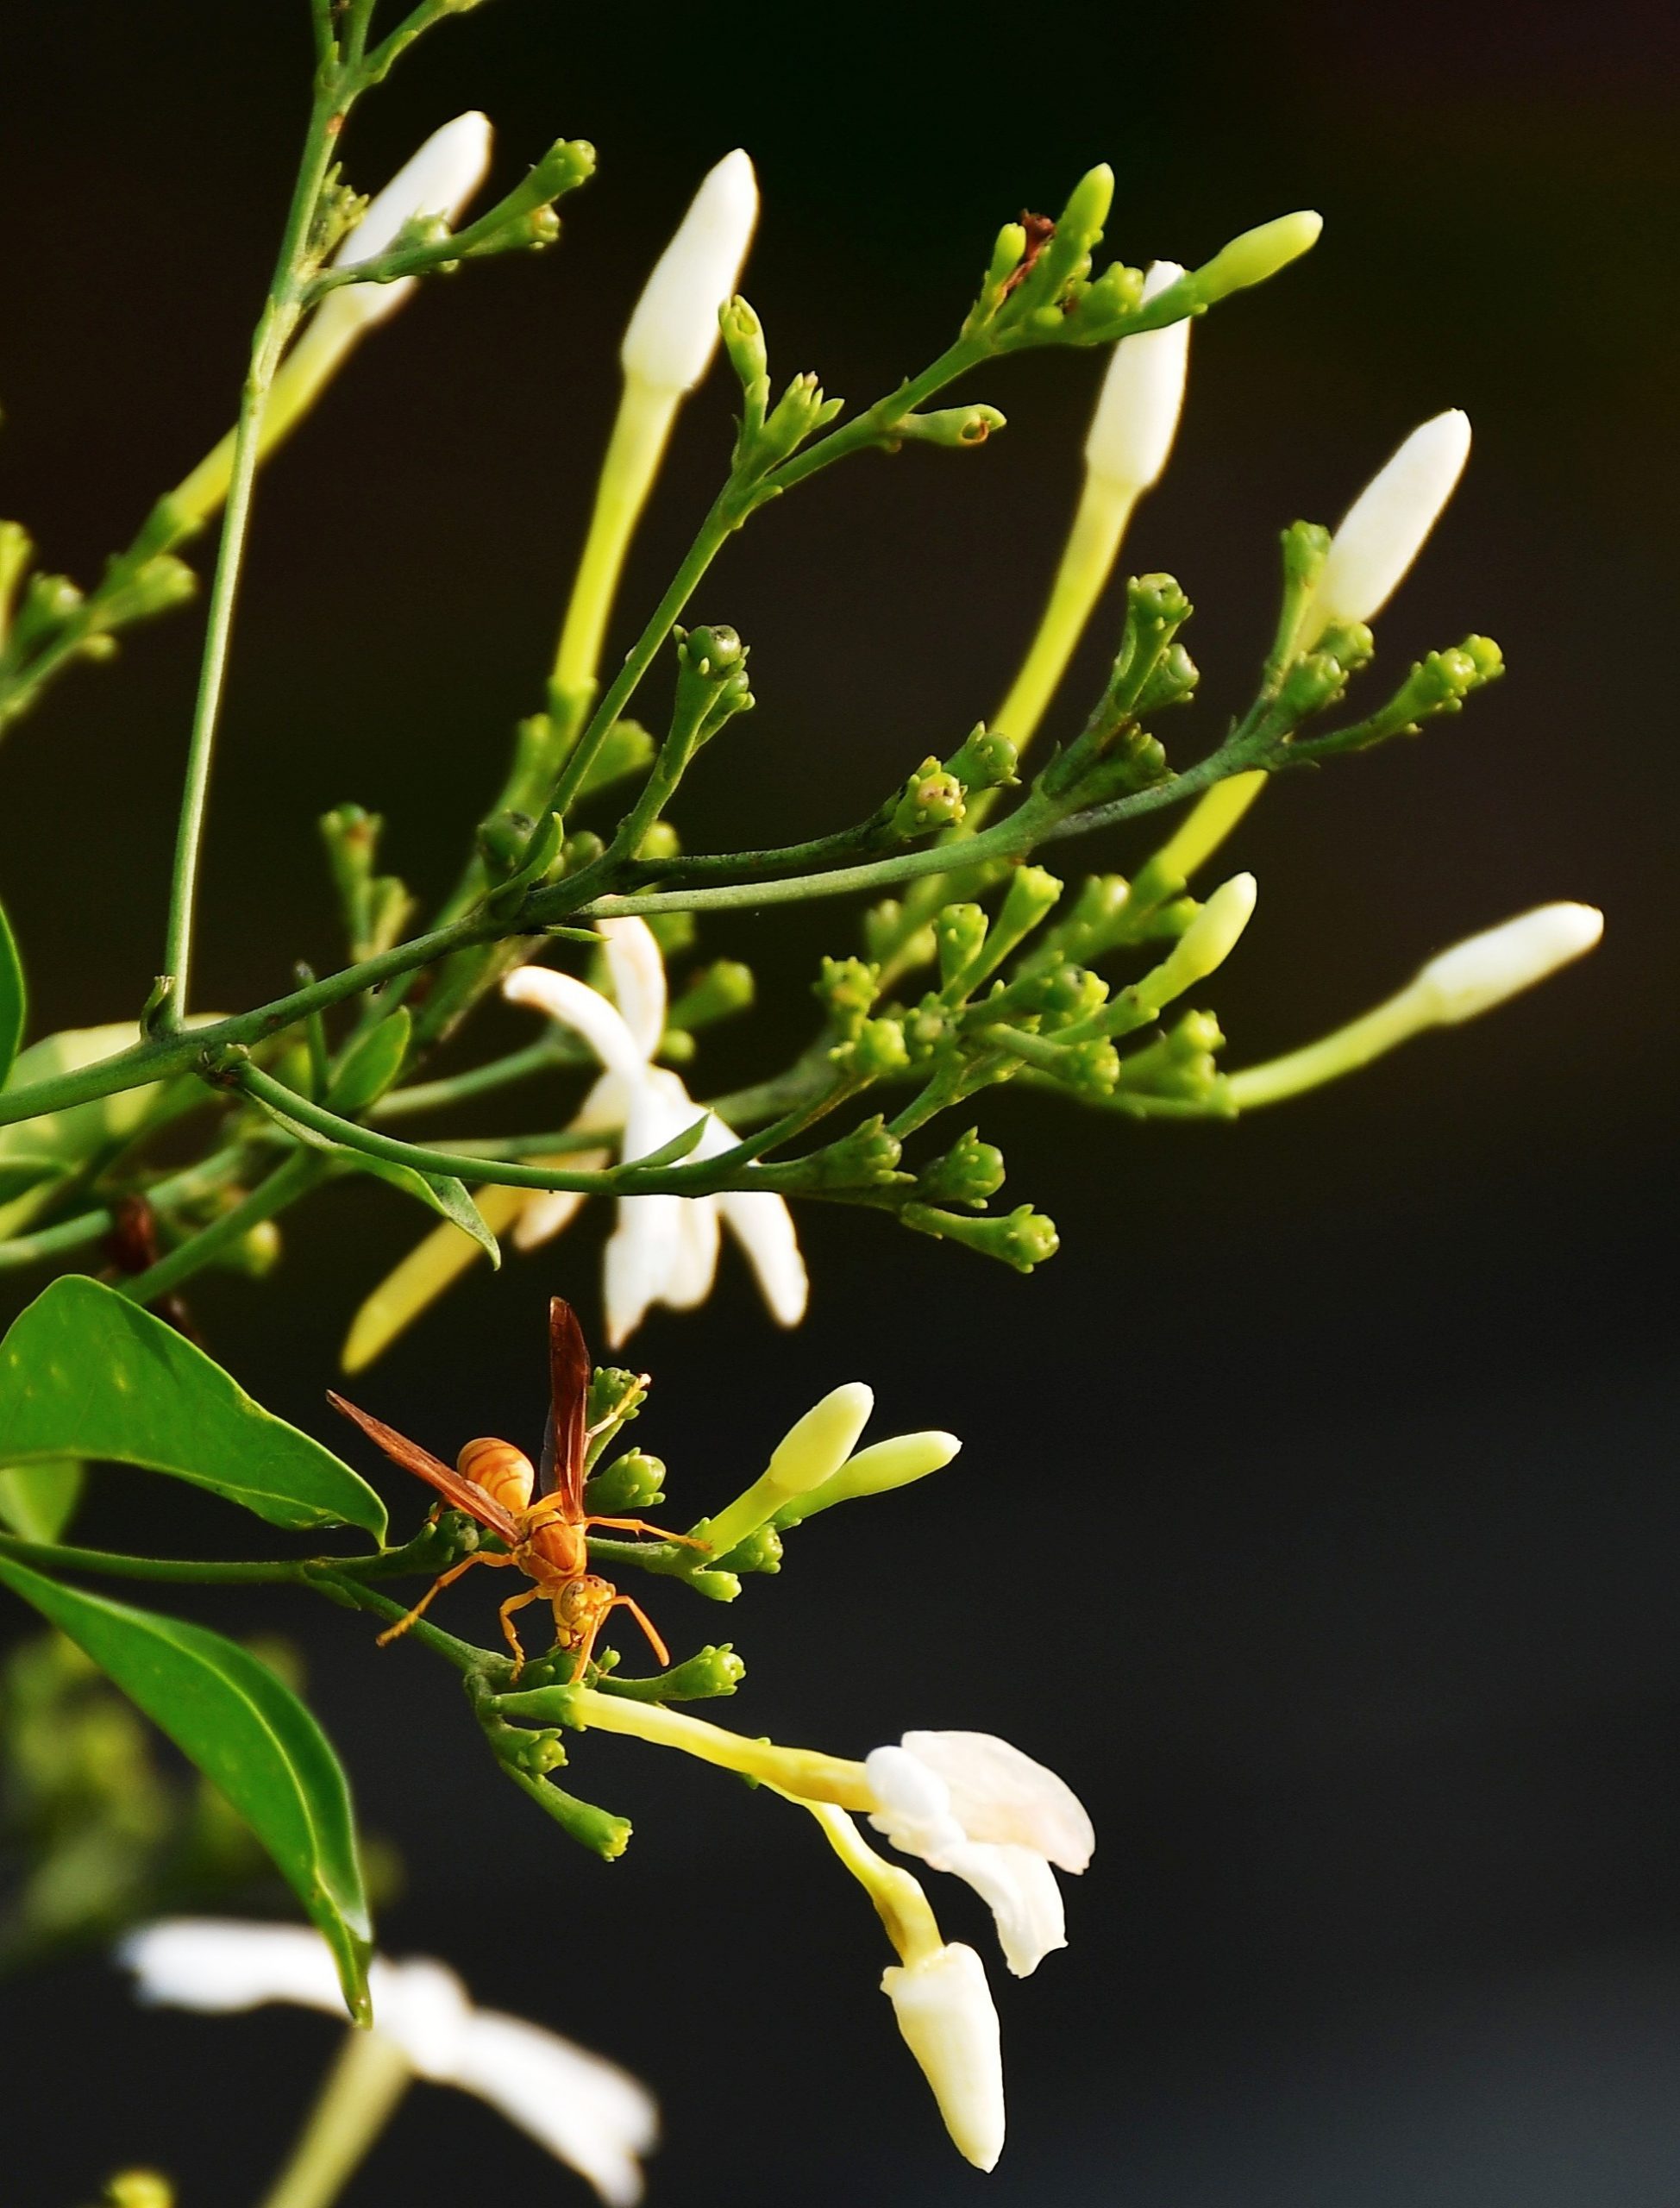 Wasp on Juhi flower